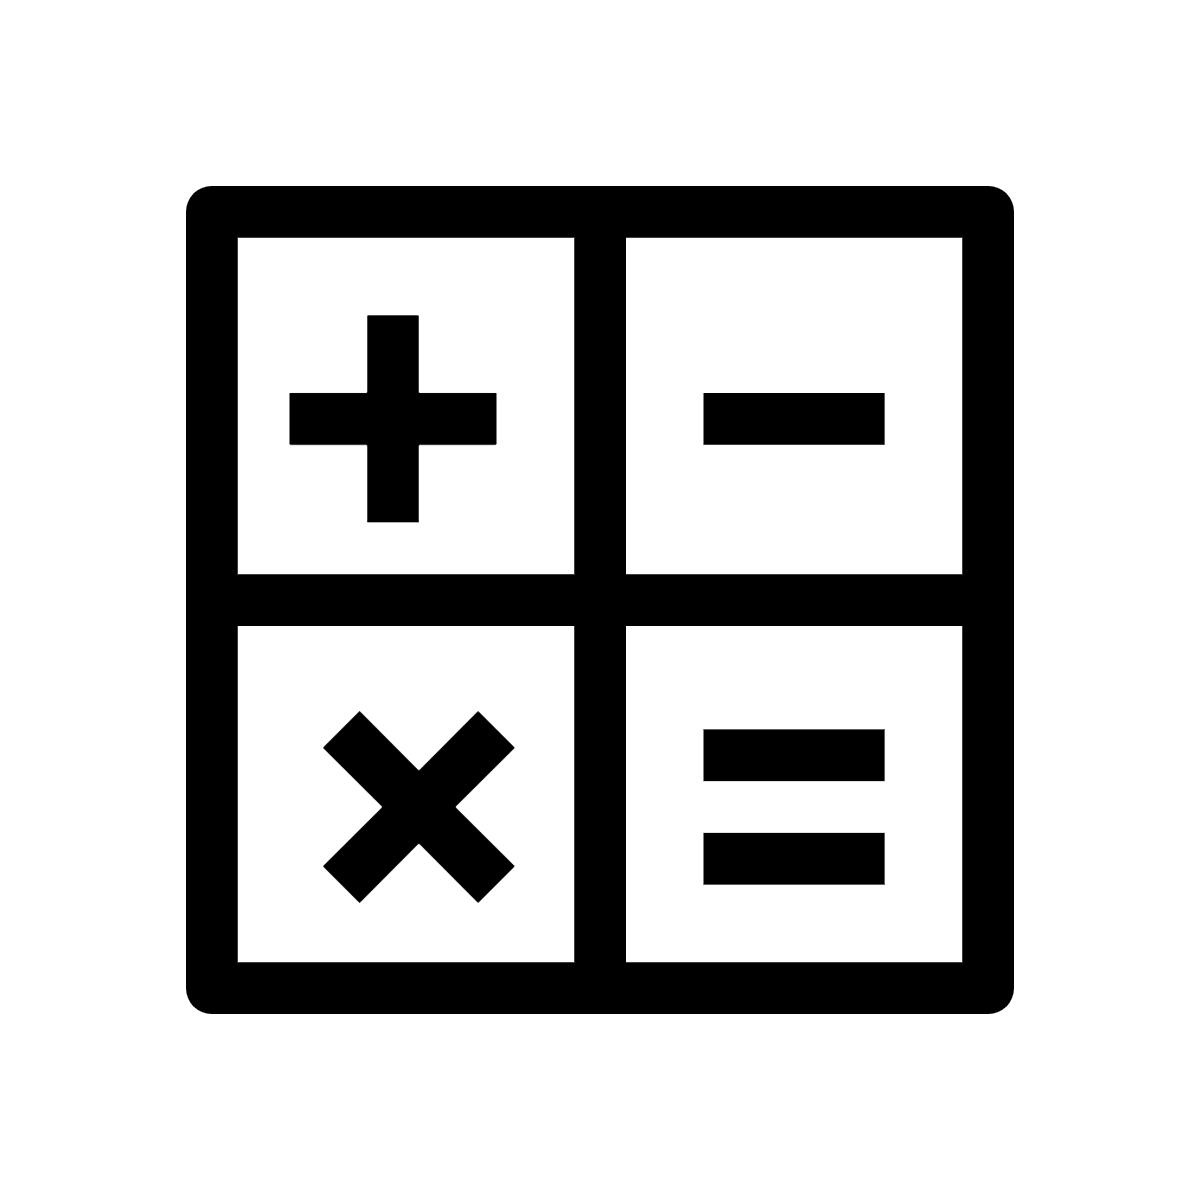 icon with the four basic math symbols